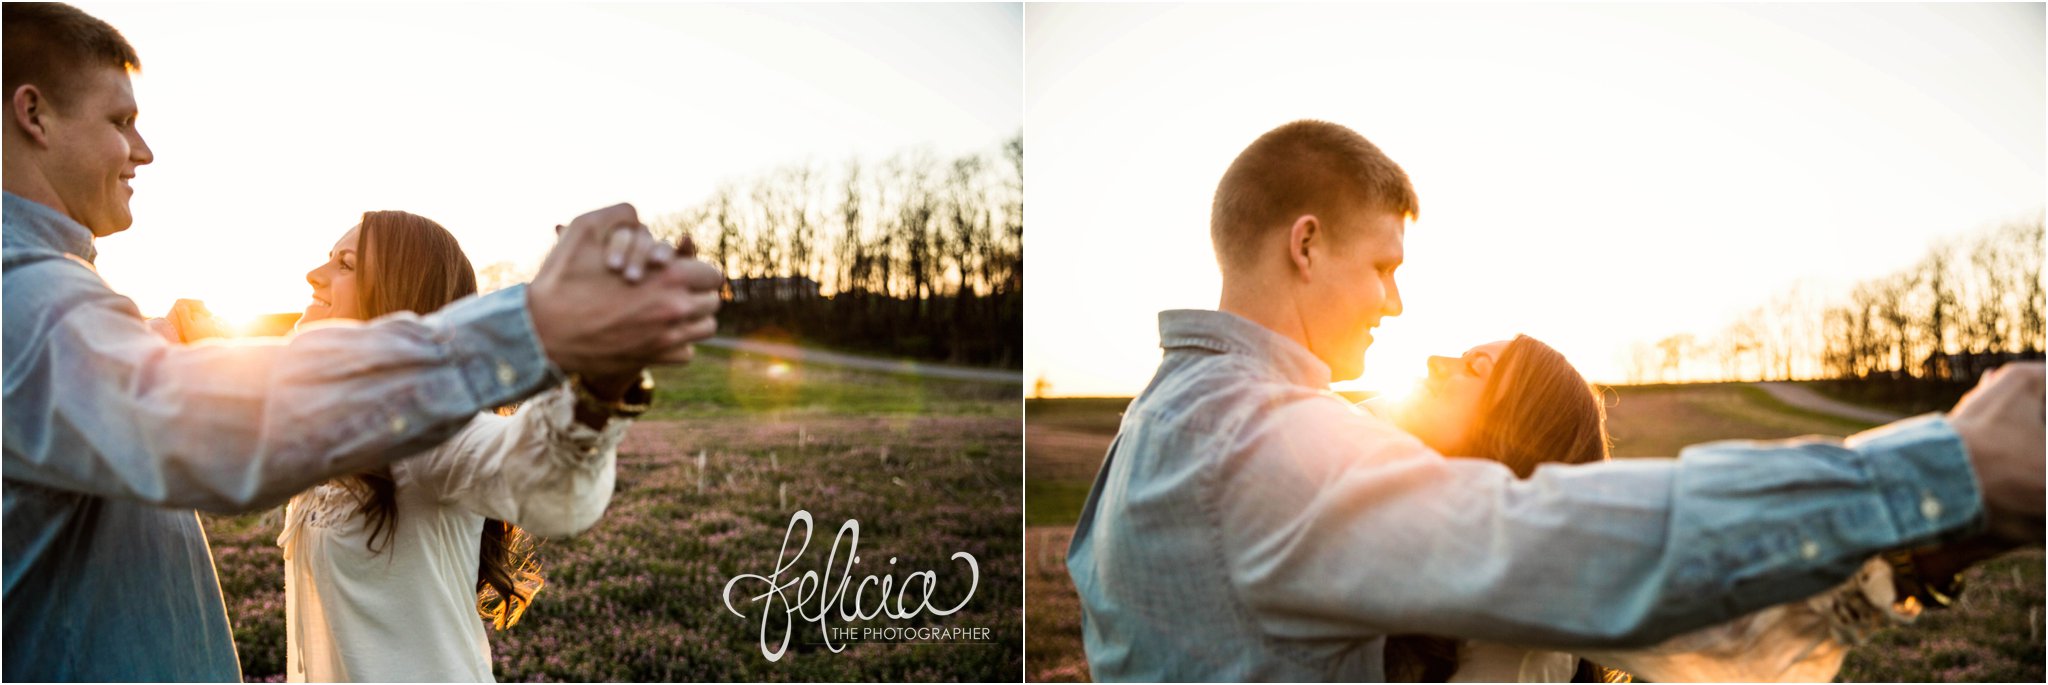 Romantic Engagement Photography | Kansas City, MO | Sunset Field Candids | Images by www.feliciathephotographer.com